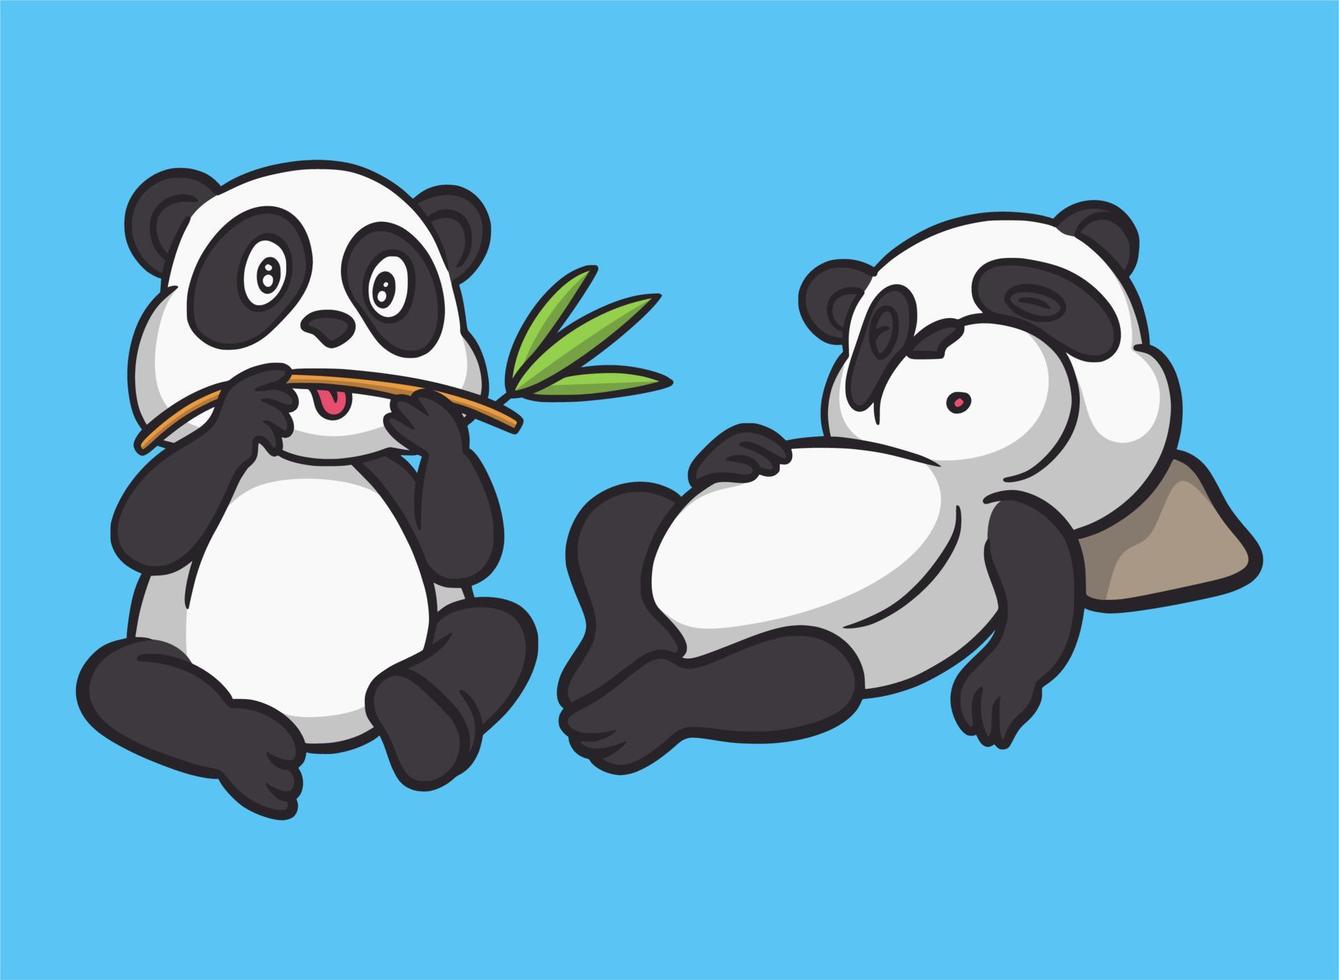 desenho animado animal design panda come bambu e o panda dorme logotipo do mascote fofo vetor